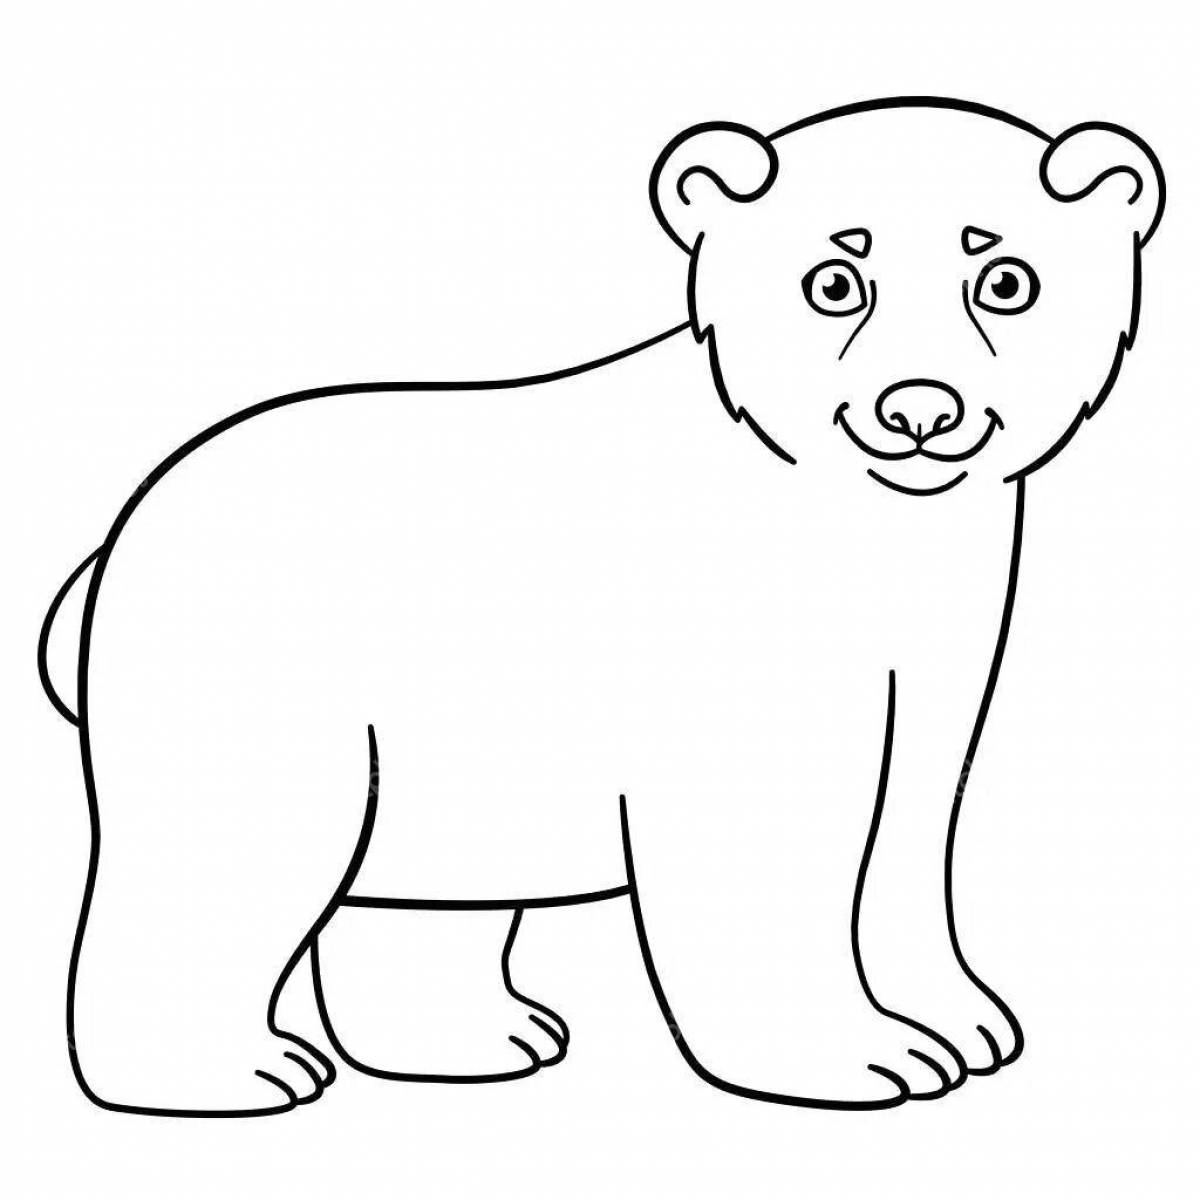 Контур белого медведя для детей